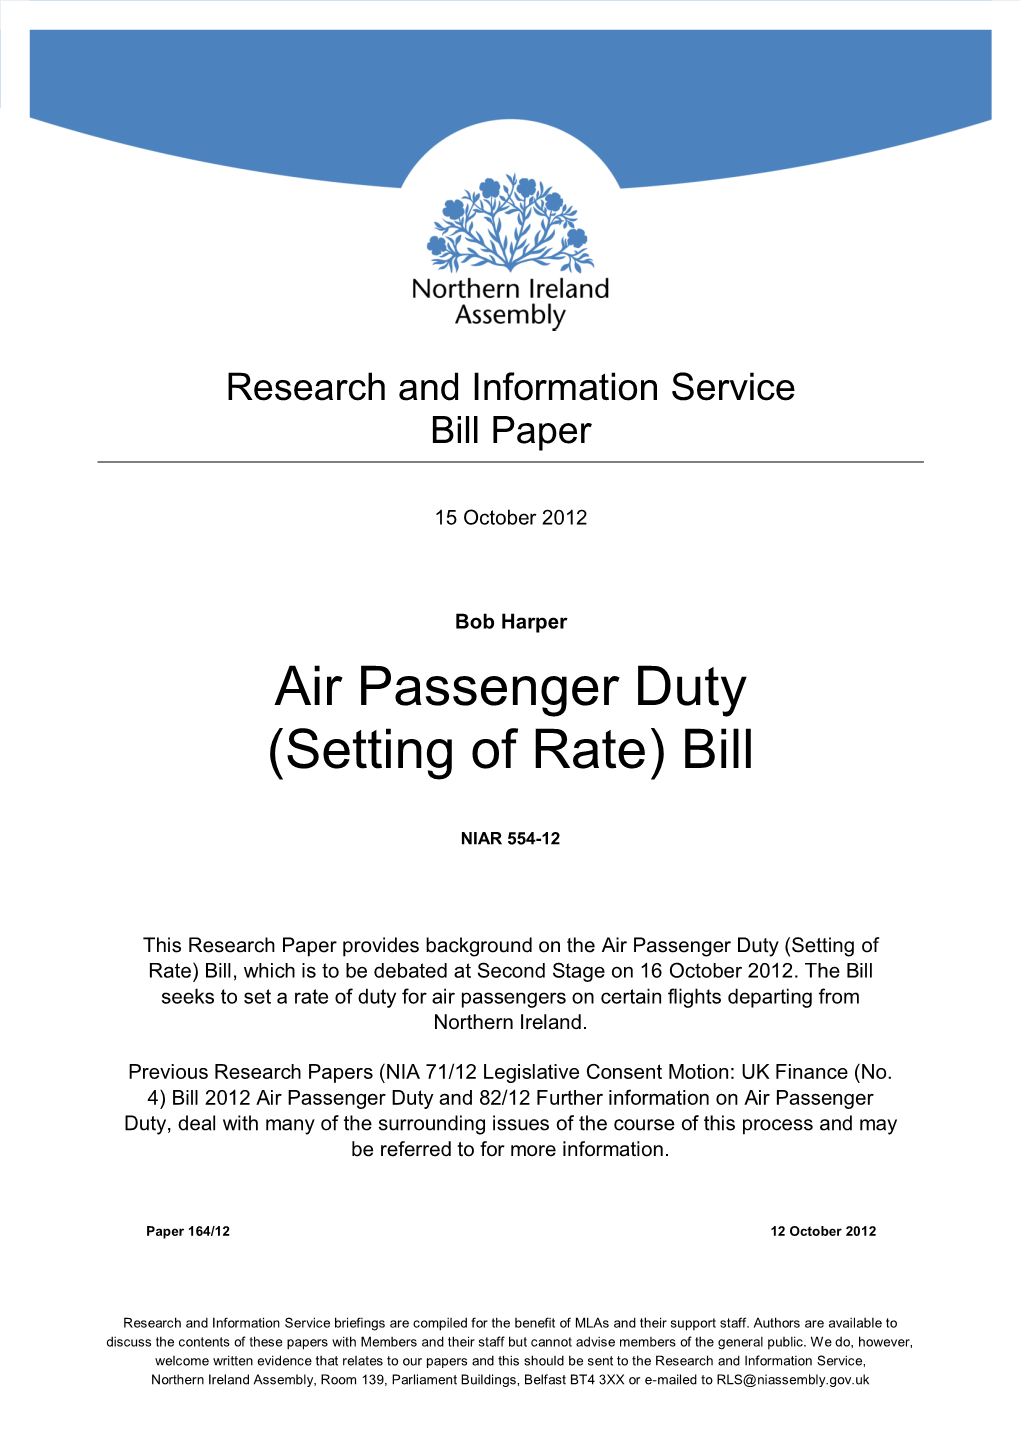 Air Passenger Duty (Setting of Rate) Bill